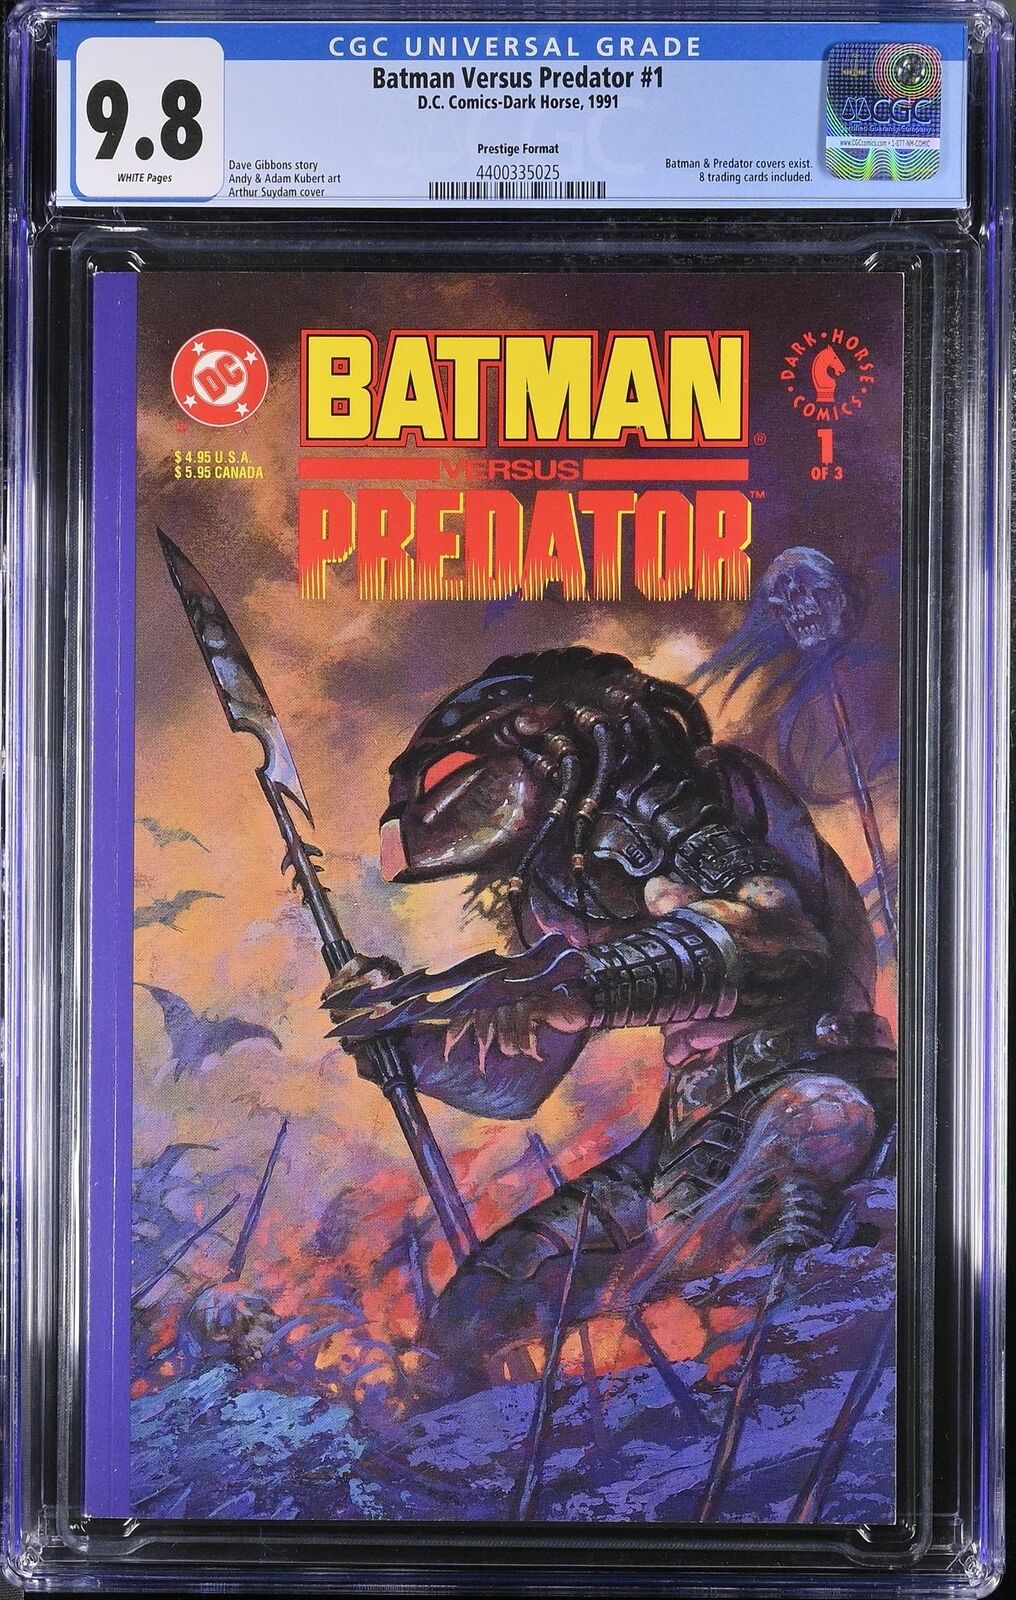 Batman Versus Predator 1 CGC 9.8 1991 4400335025 Prestige Predator Format